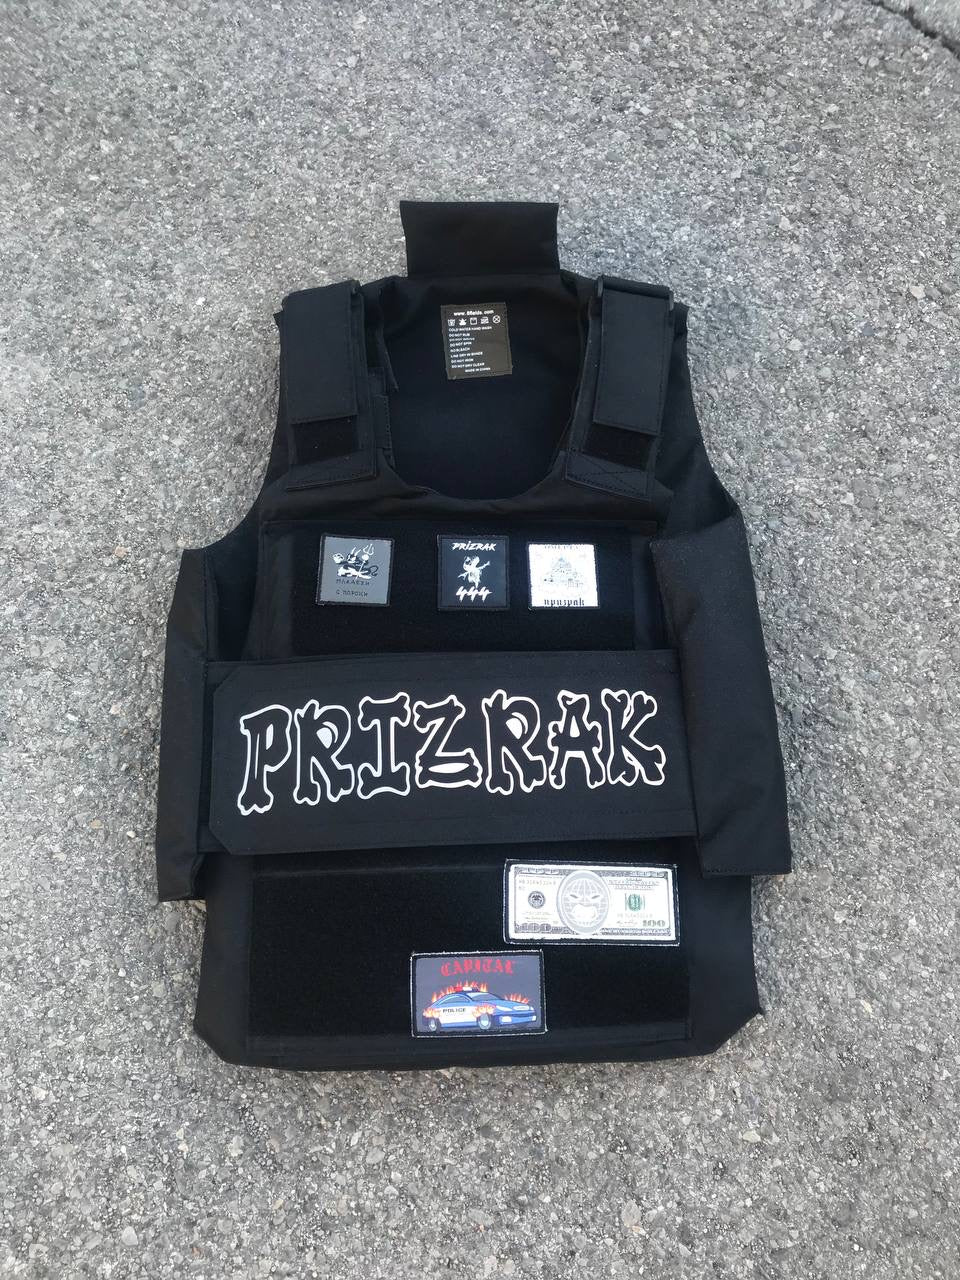 Prizrak "Army of 4" Vest